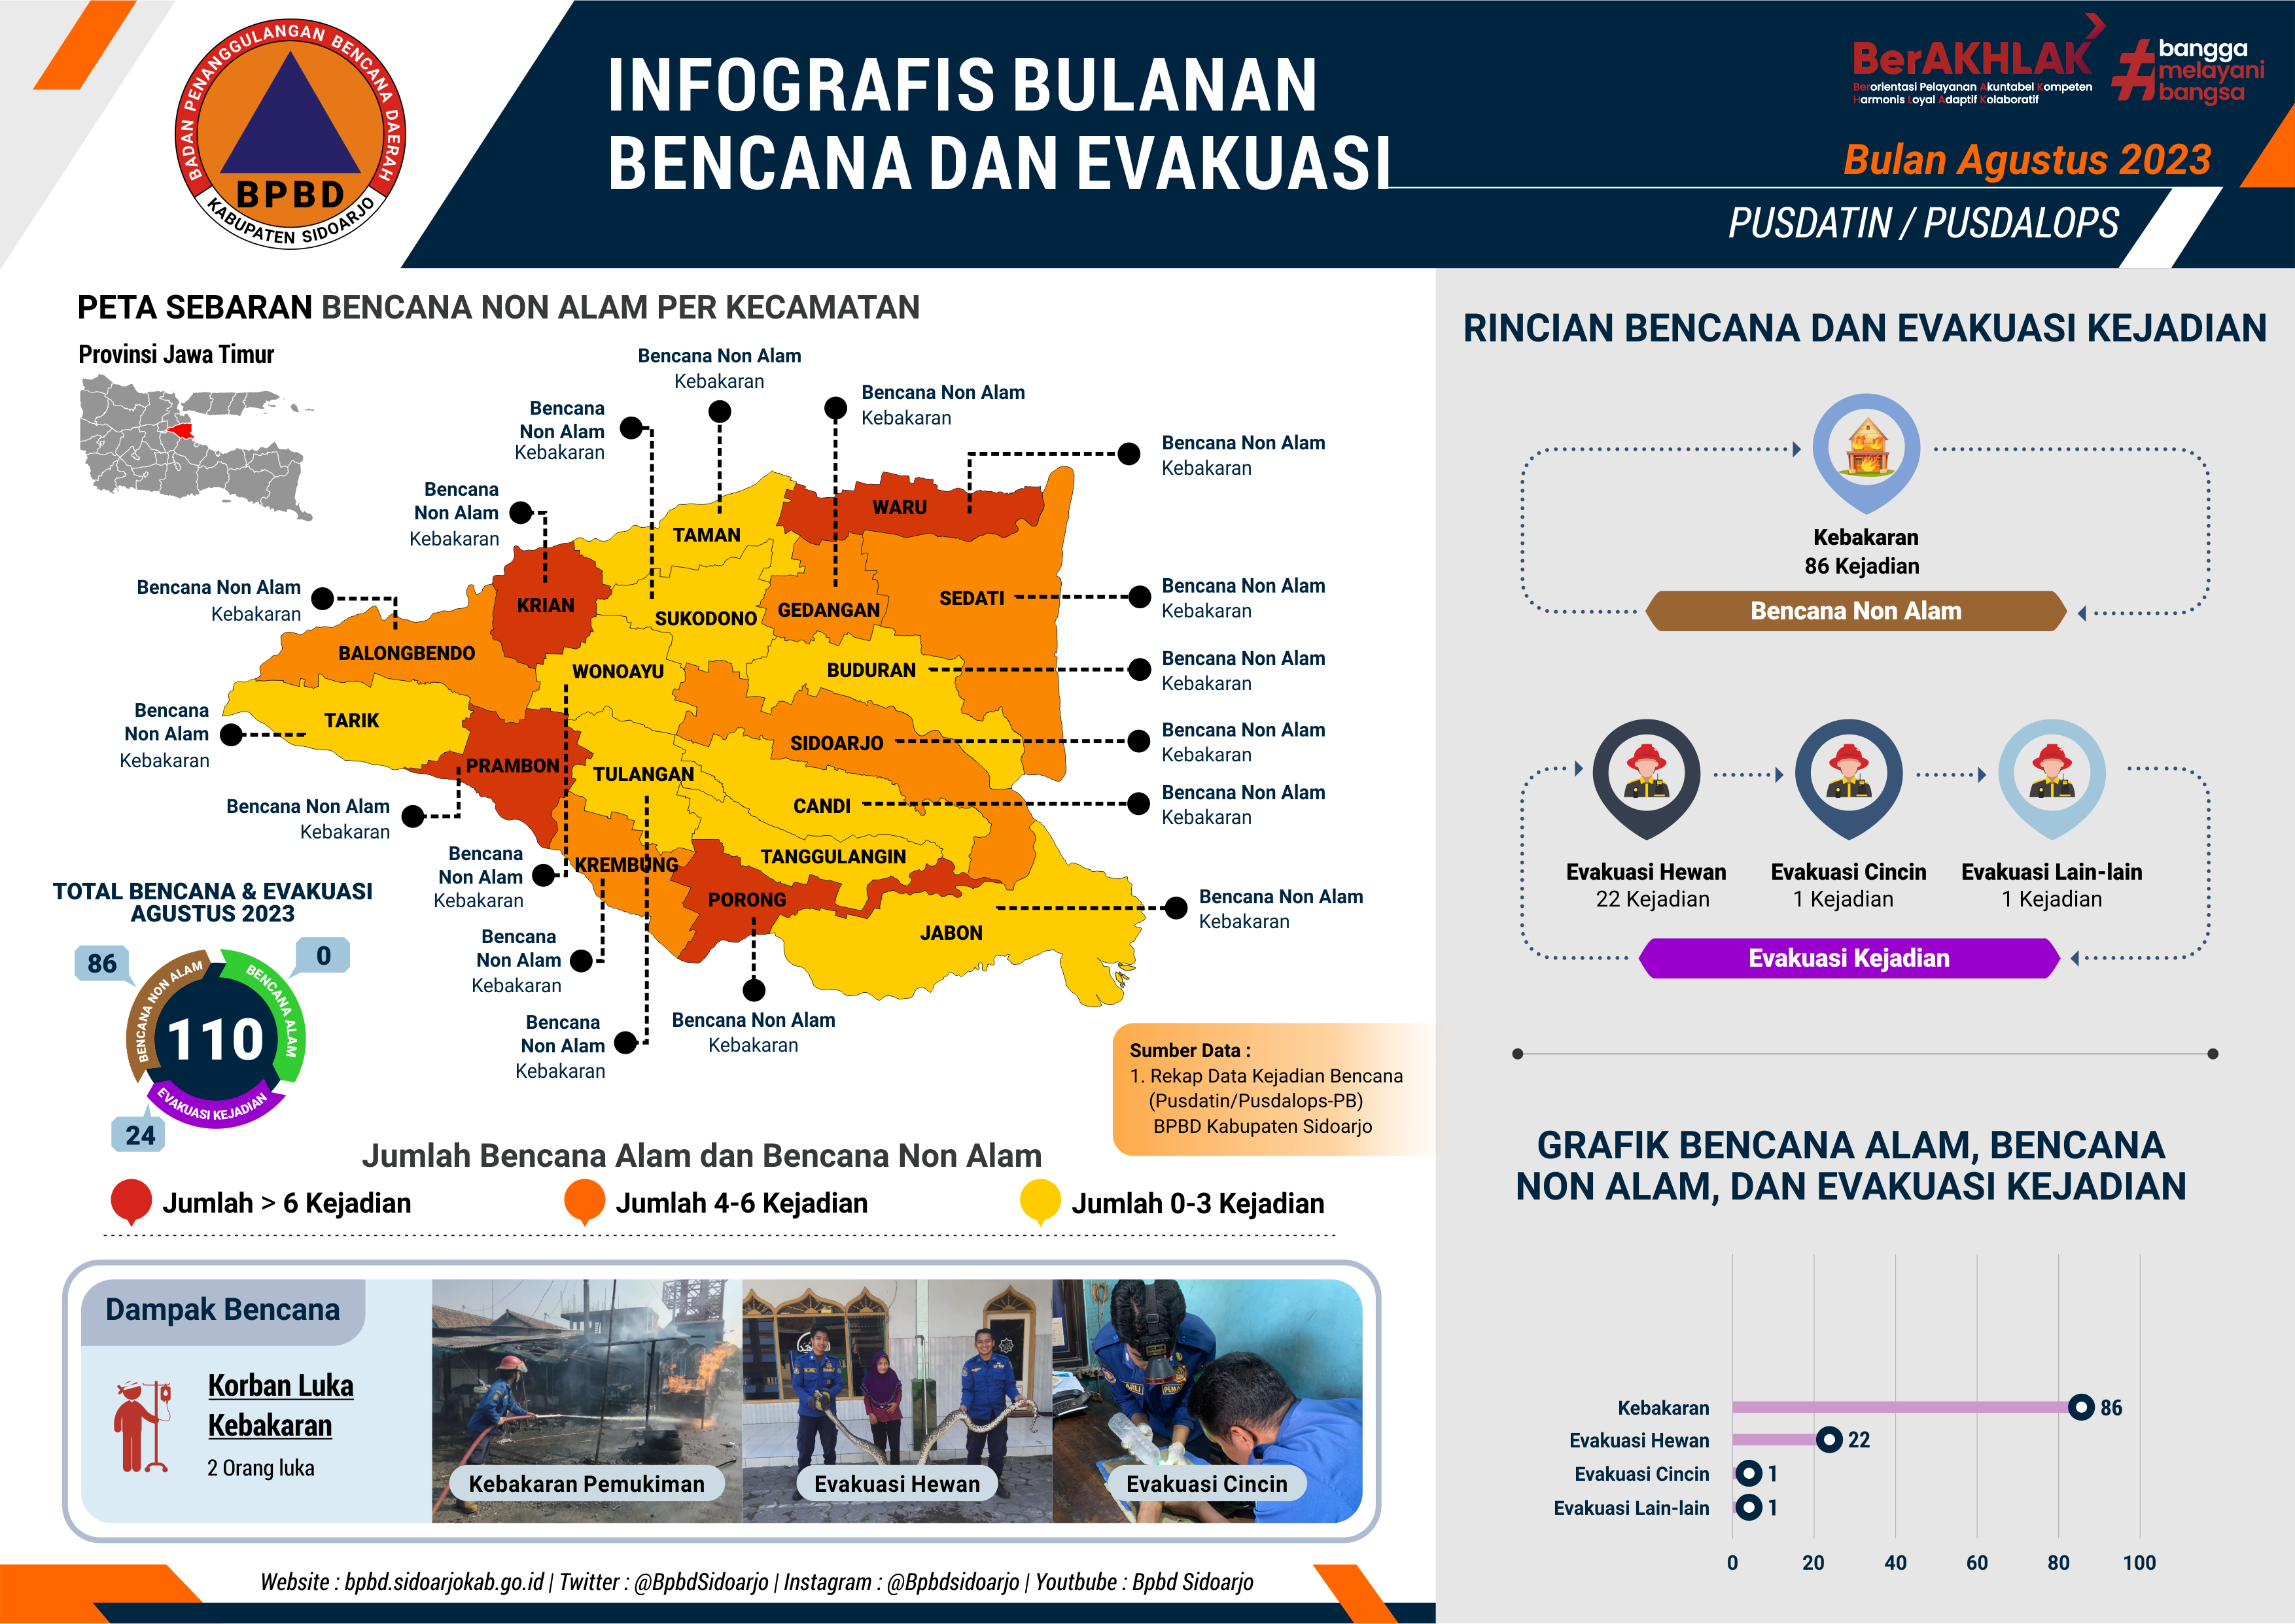 Infografis Bulanan Bencana & Evakuasi Bulan Agustus 2023